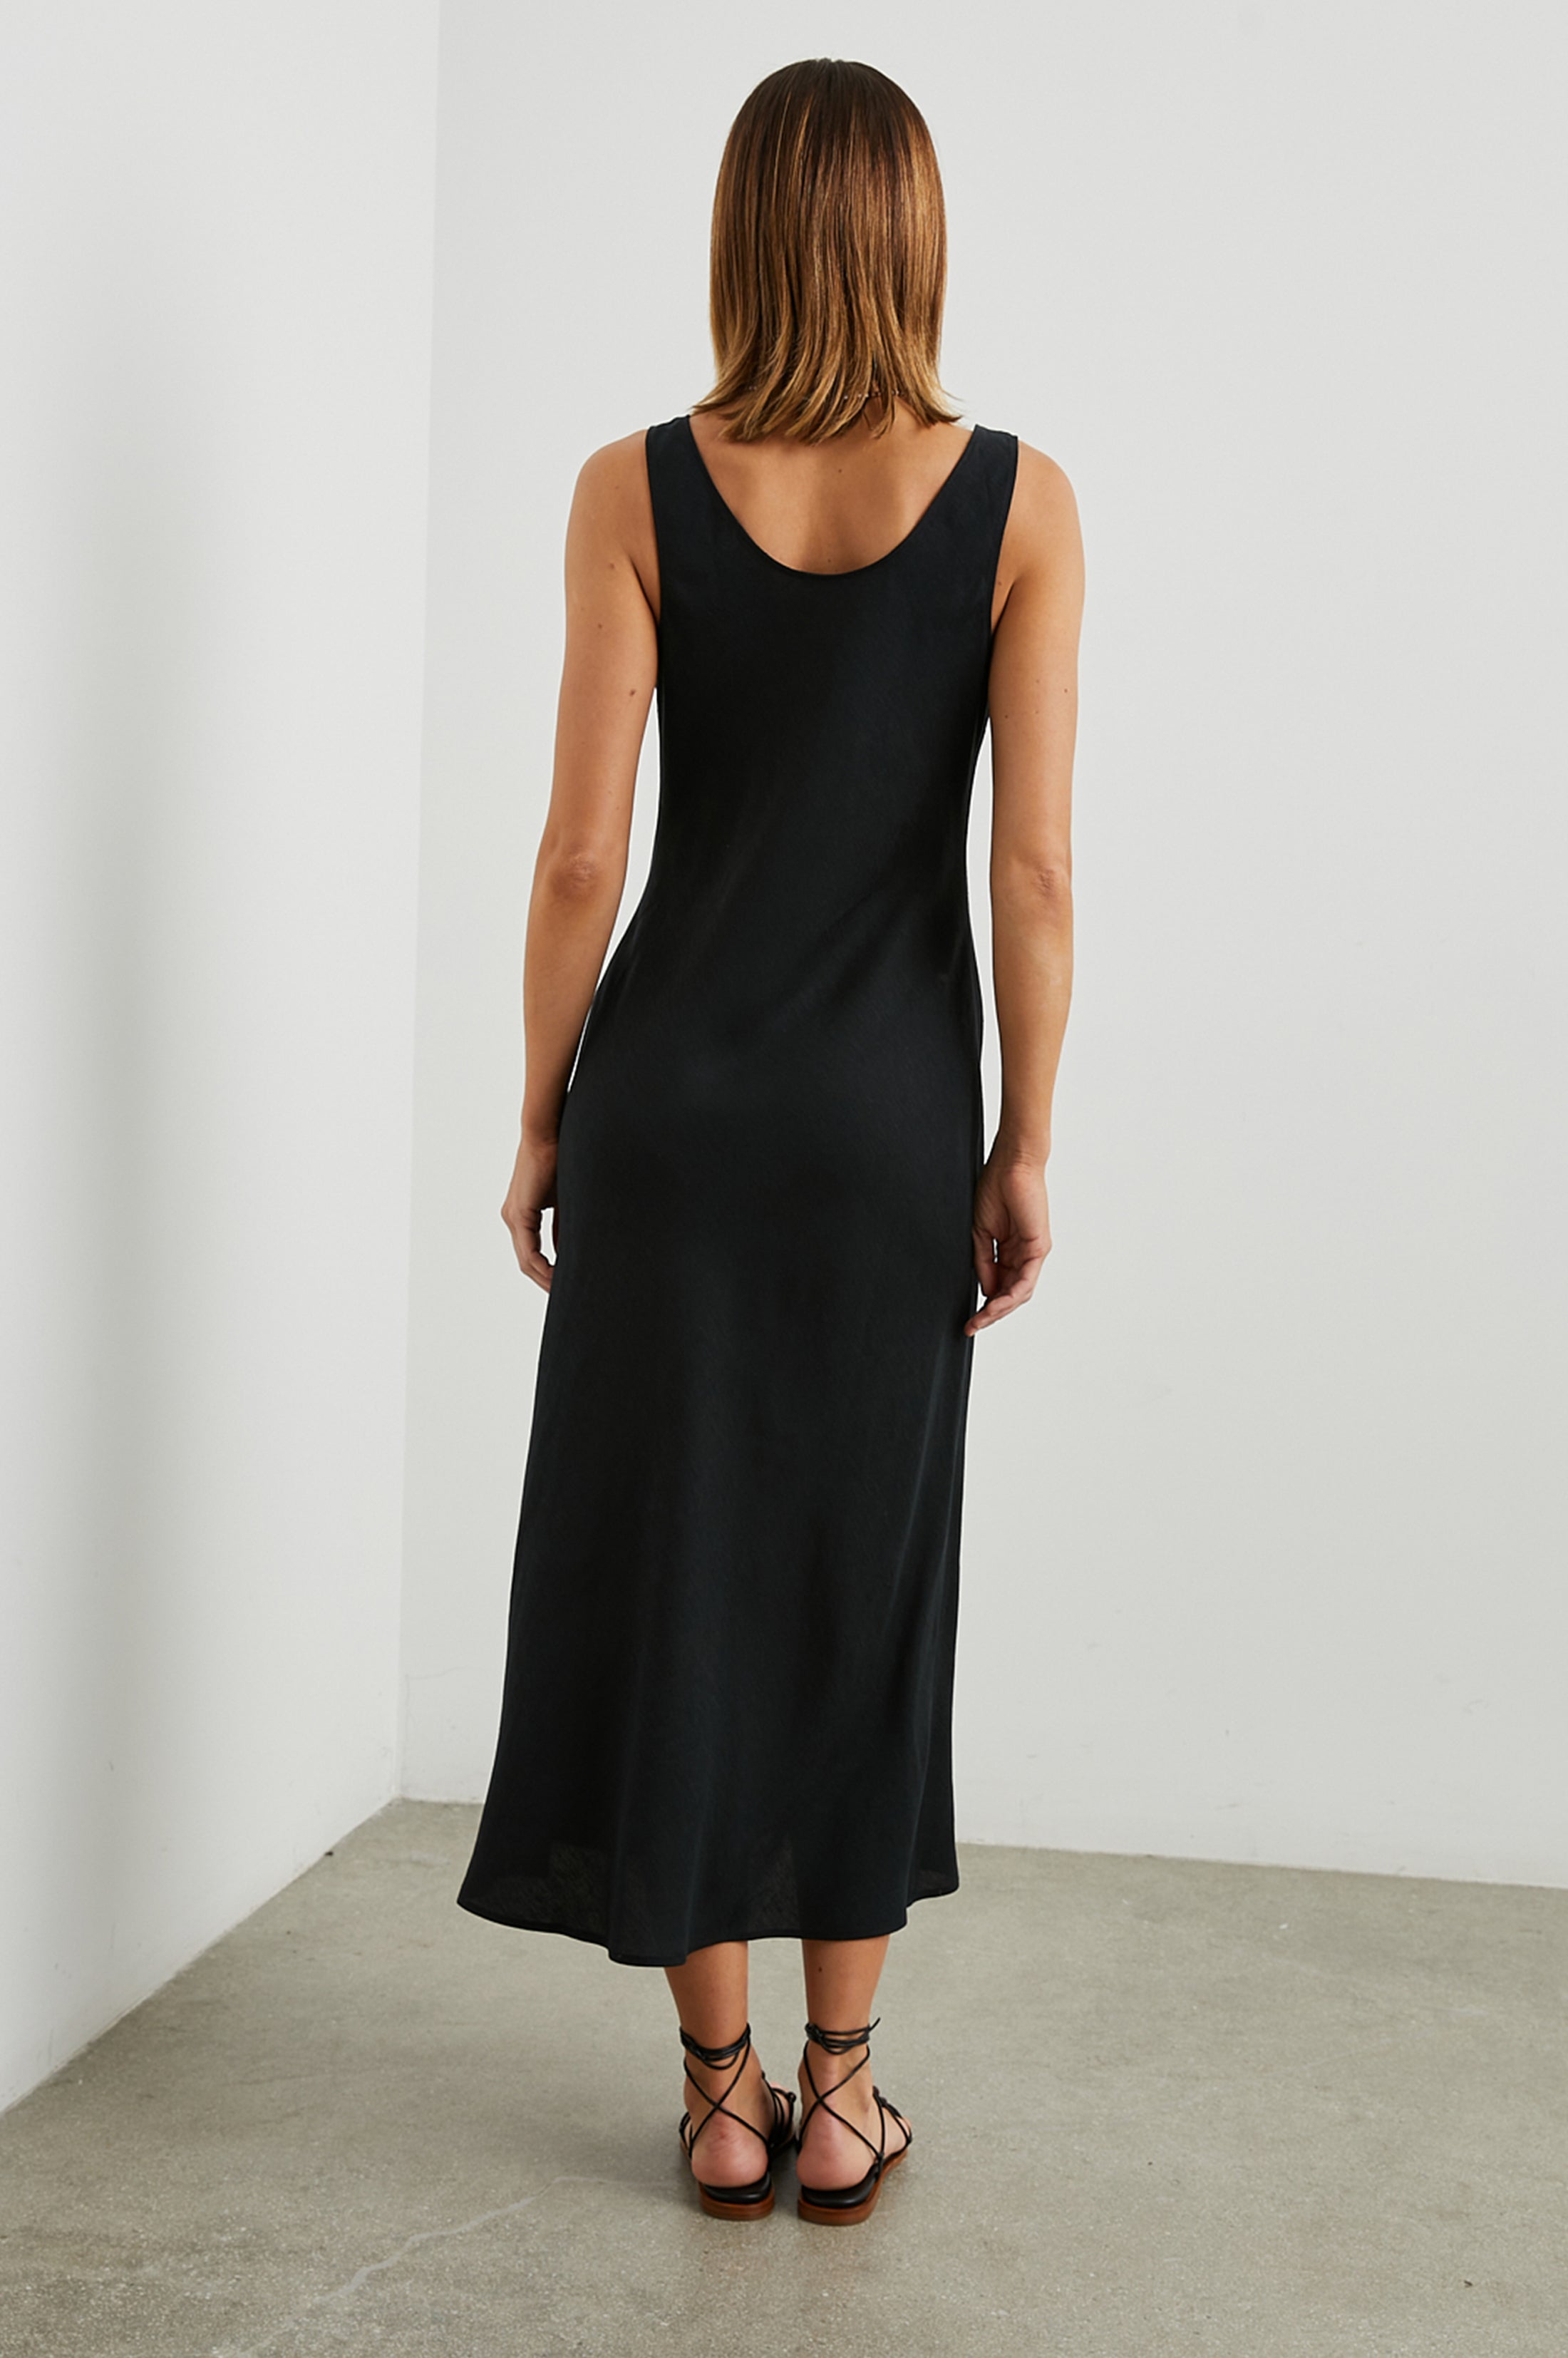 Black sleeveless dress with side split rear view